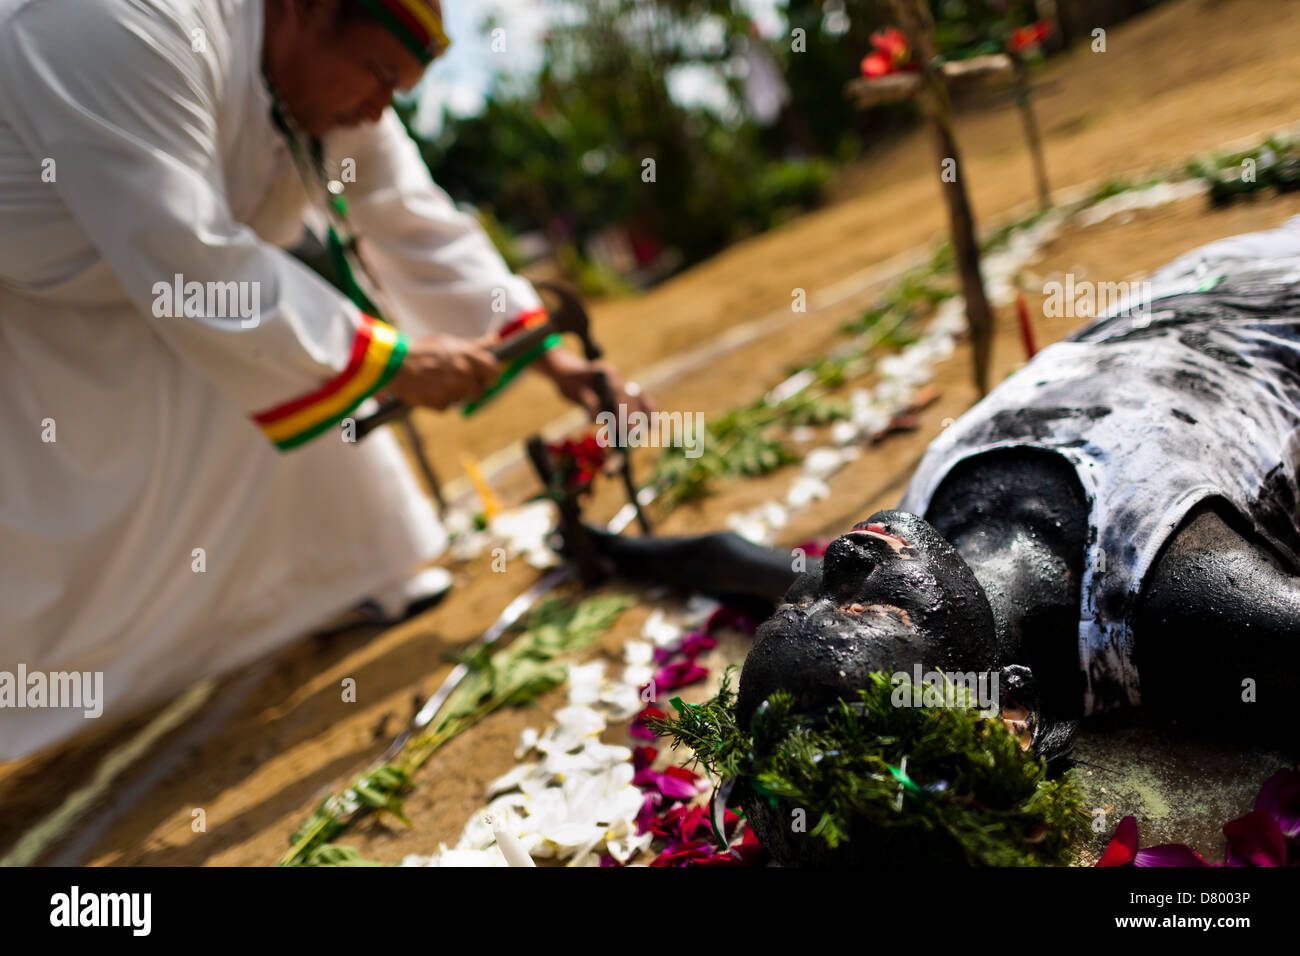 Hermes Cifuentes, kolumbianische Geistheiler, bereitet eine Ritual des Exorzismus auf Diana R. in La Cumbre, Kolumbien. Stockfoto